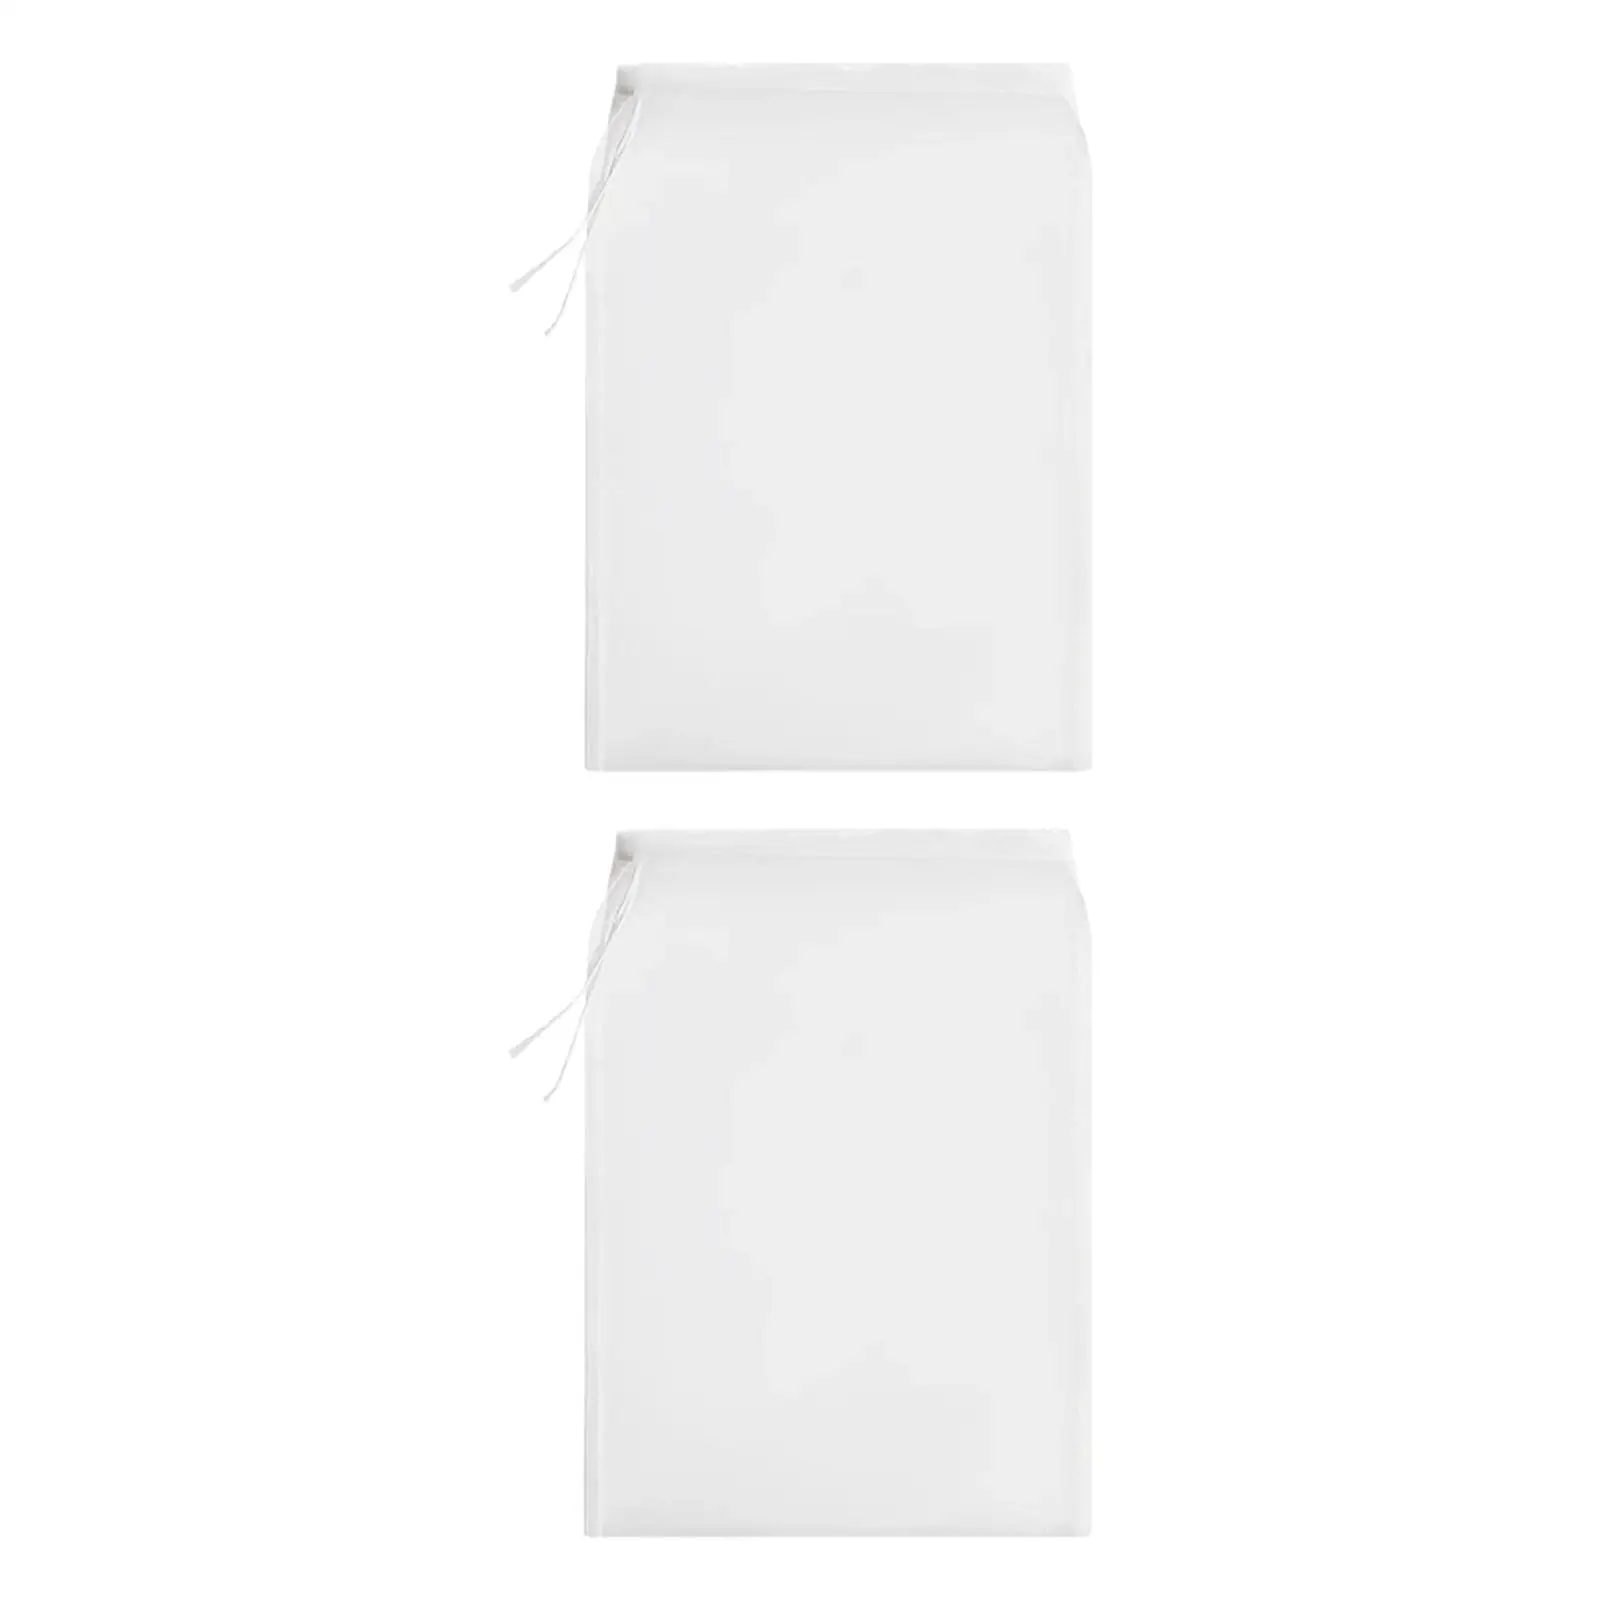 Nut Milk Bag Cheesecloth Bag Yogurt Filter Food Grade Sieve Filter Reusable for Nut Milk Spice Soy Milk Oil 11.81`` x 7.87``